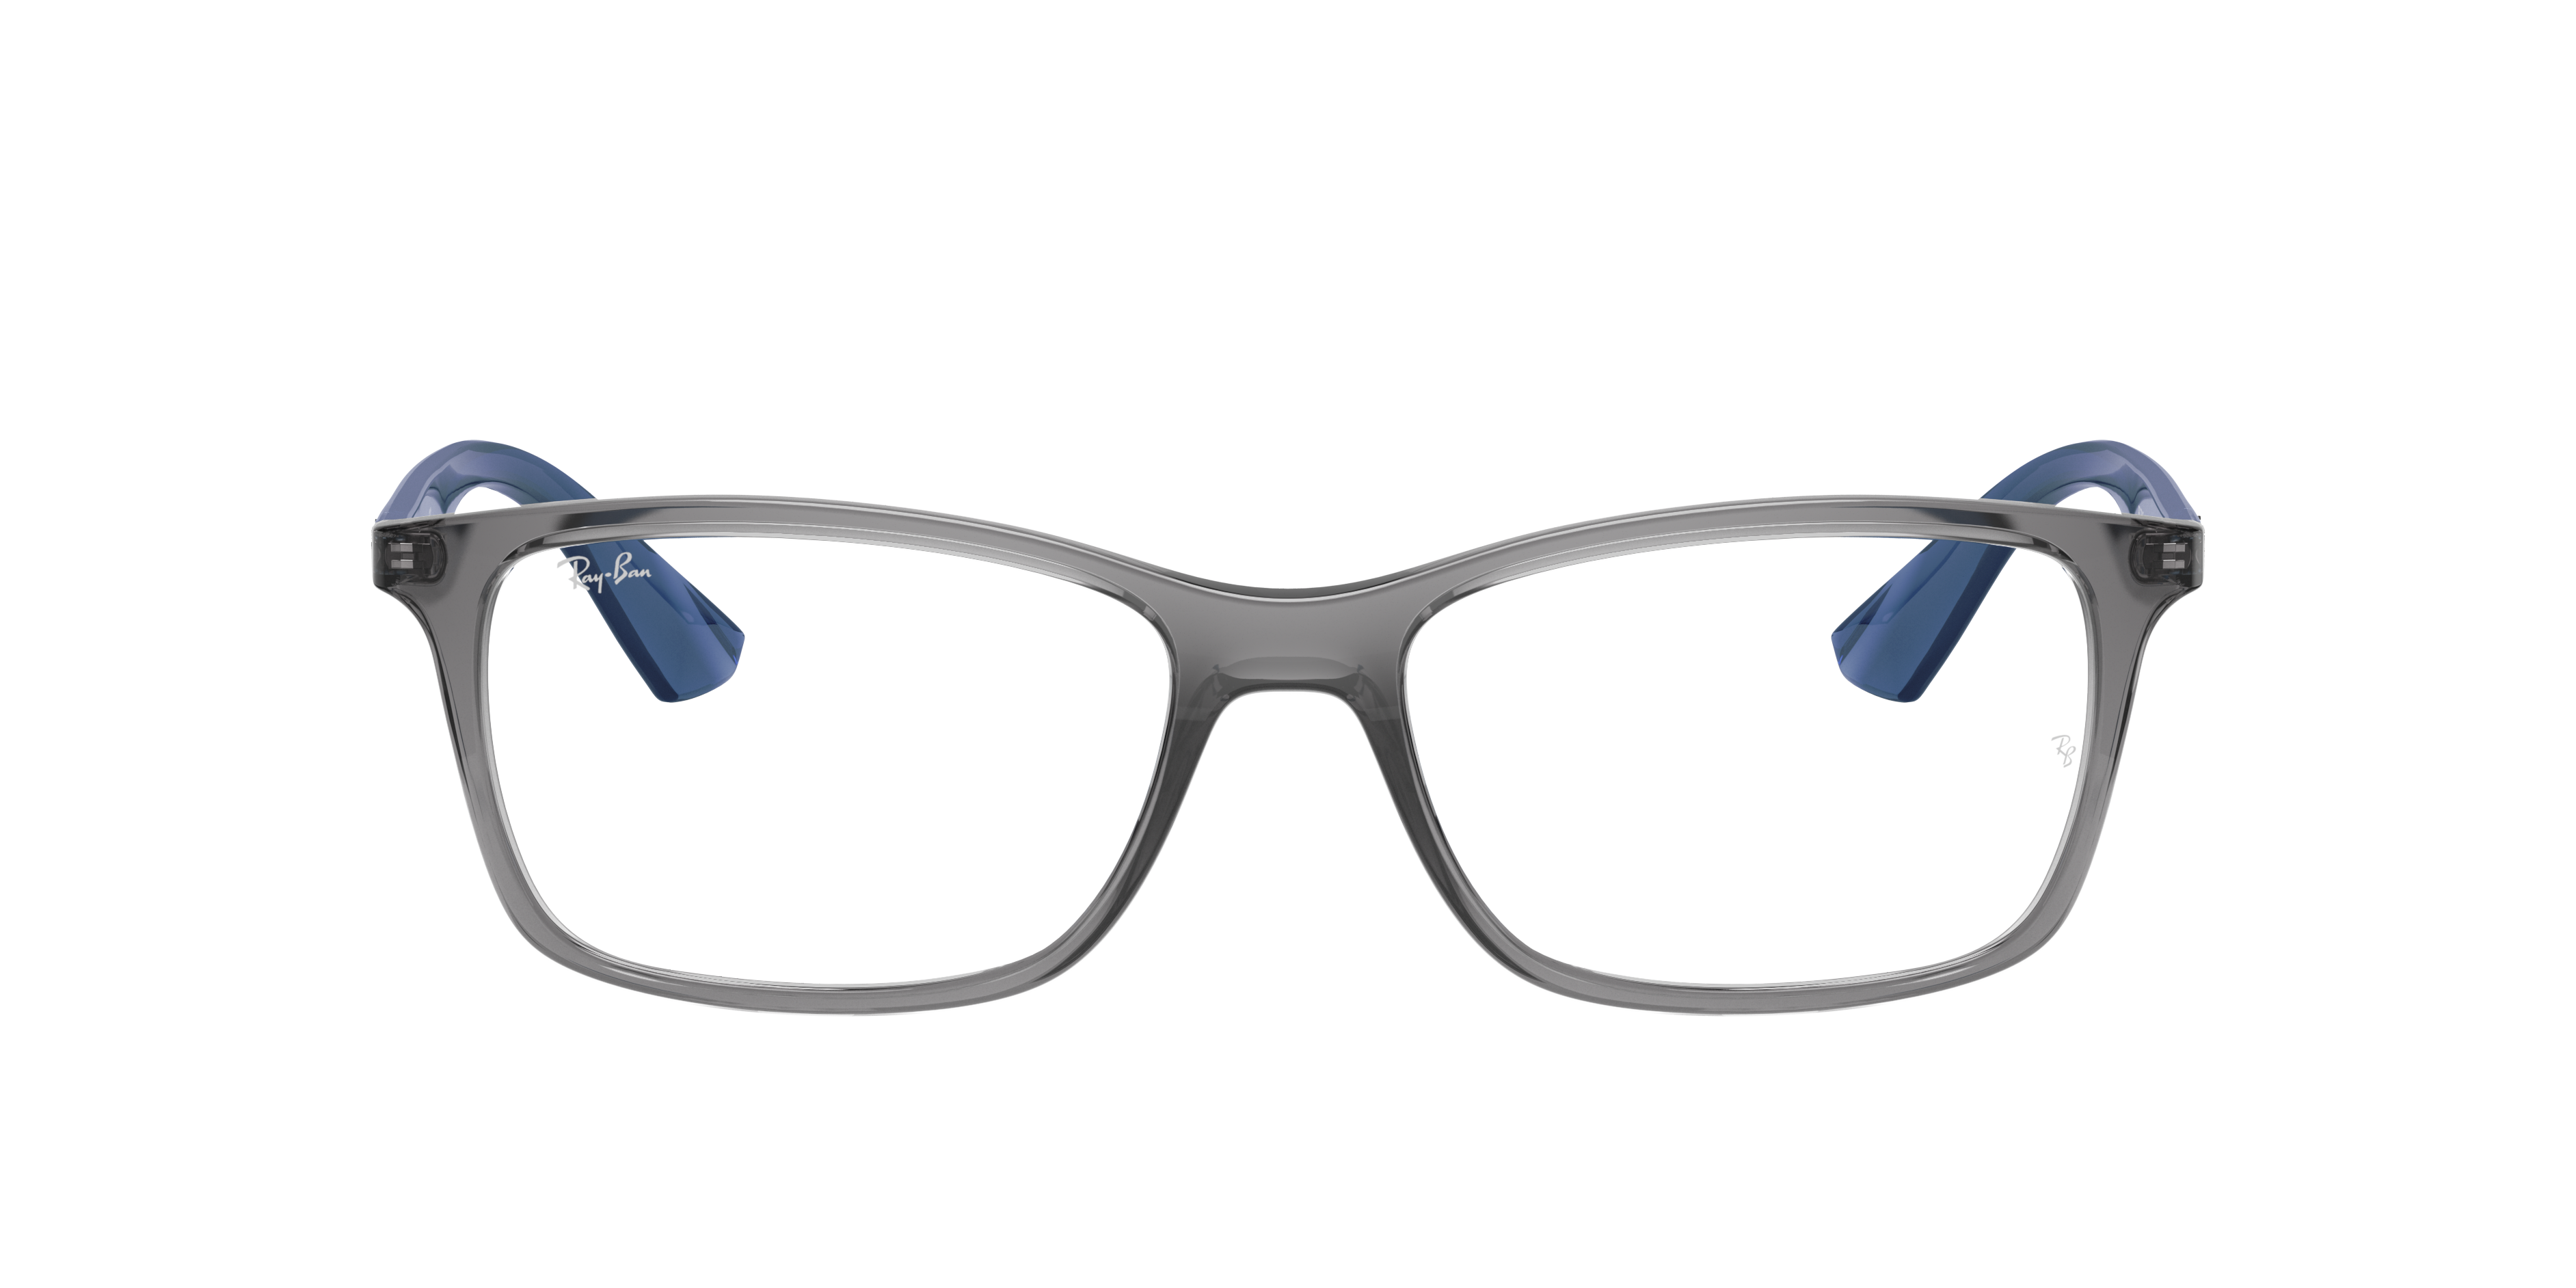 Ray-Ban 0RX7047 Glasses in Silver/gunmetal/grey | Target Optical